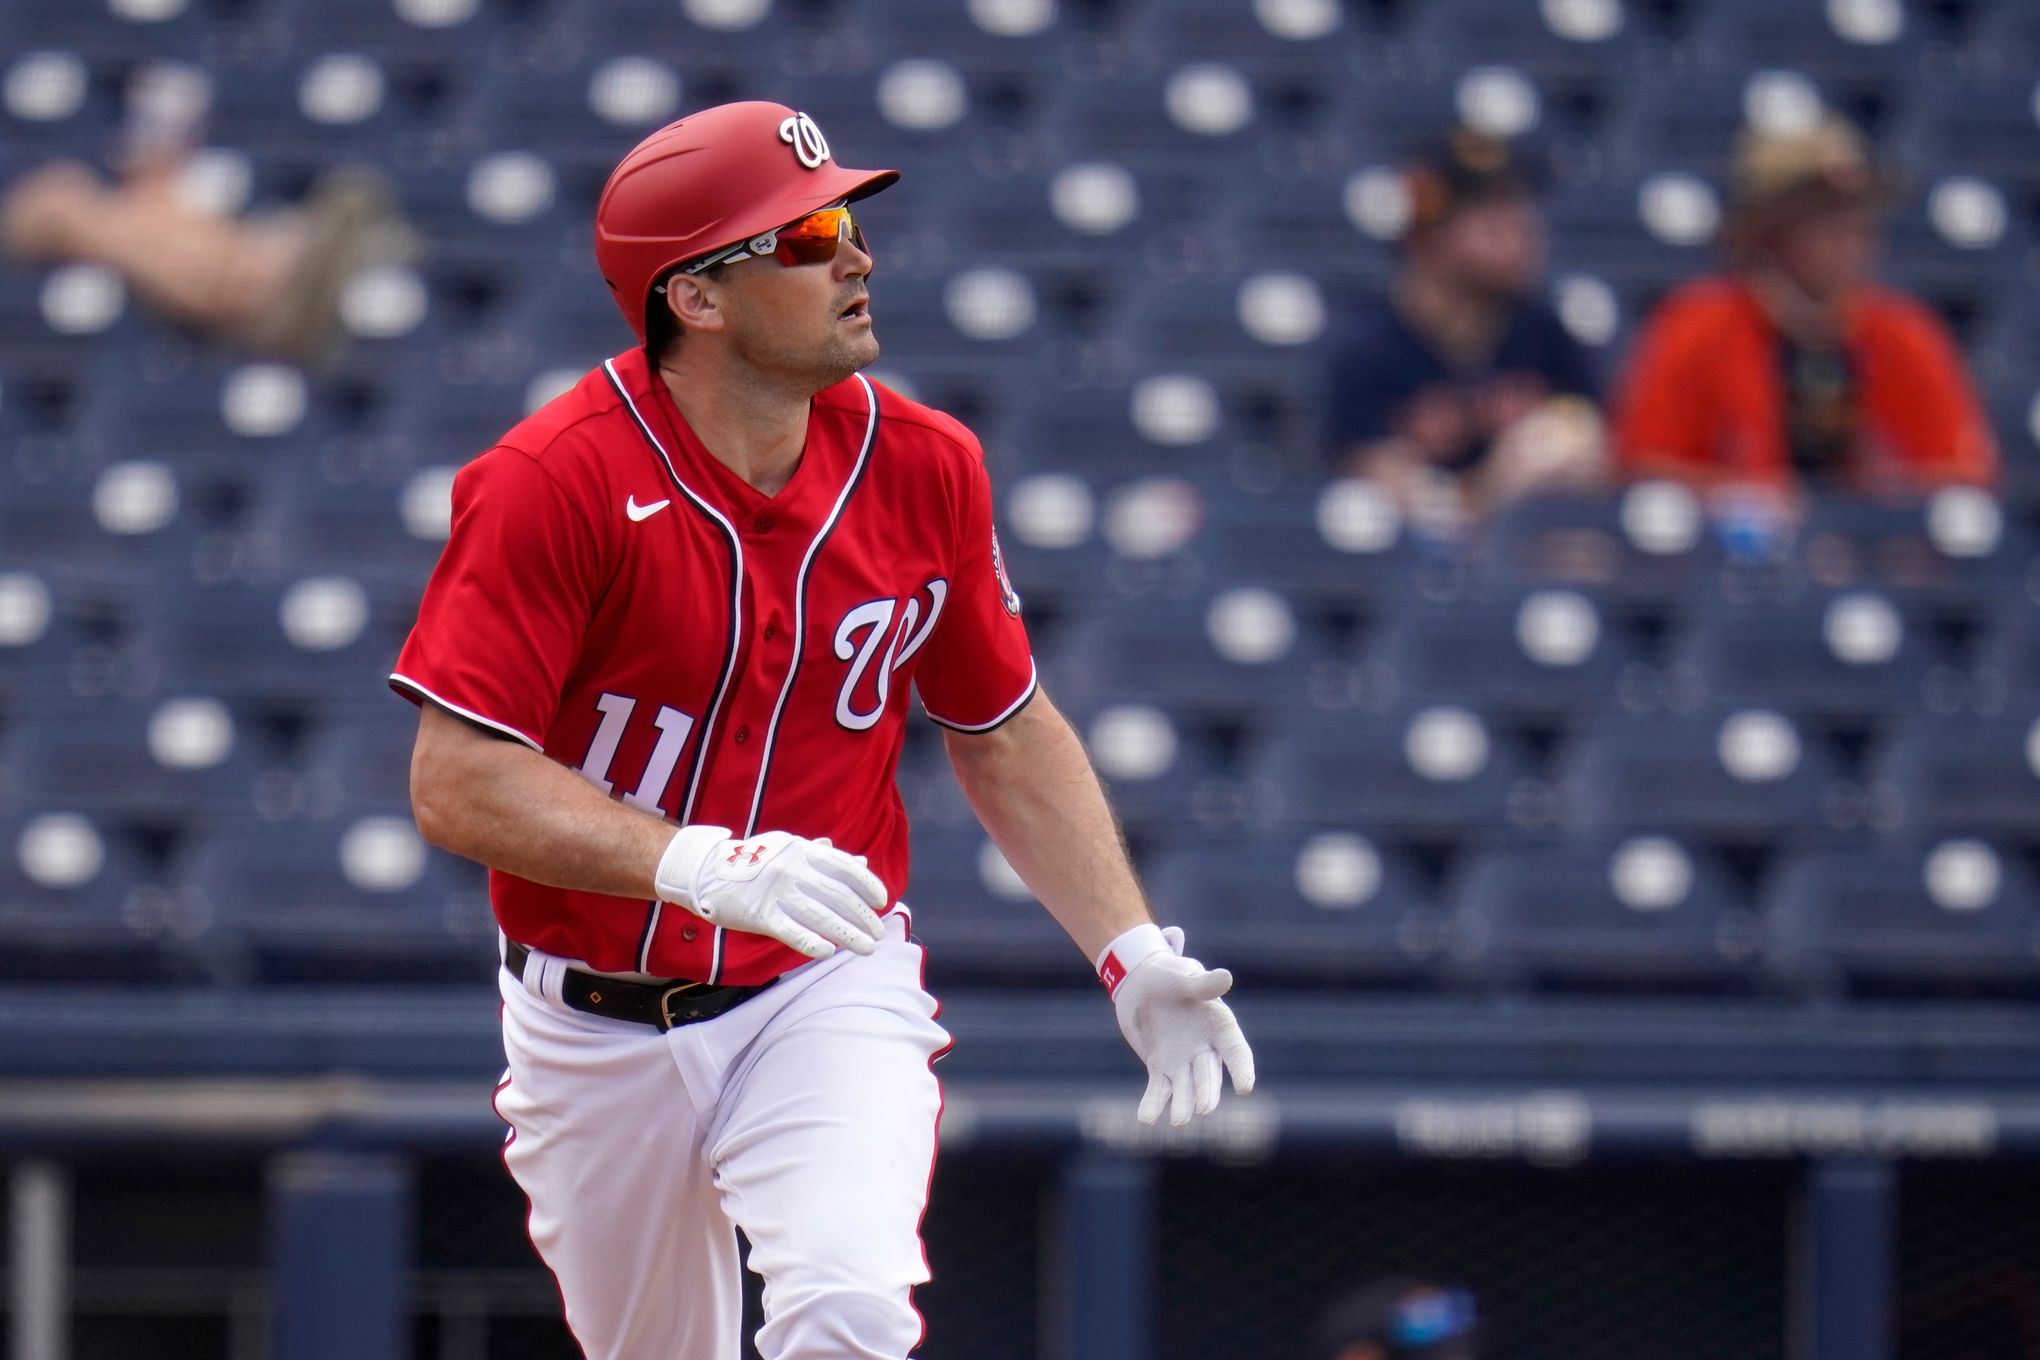 Washington Nationals' first baseman Ryan Zimmerman opens his home